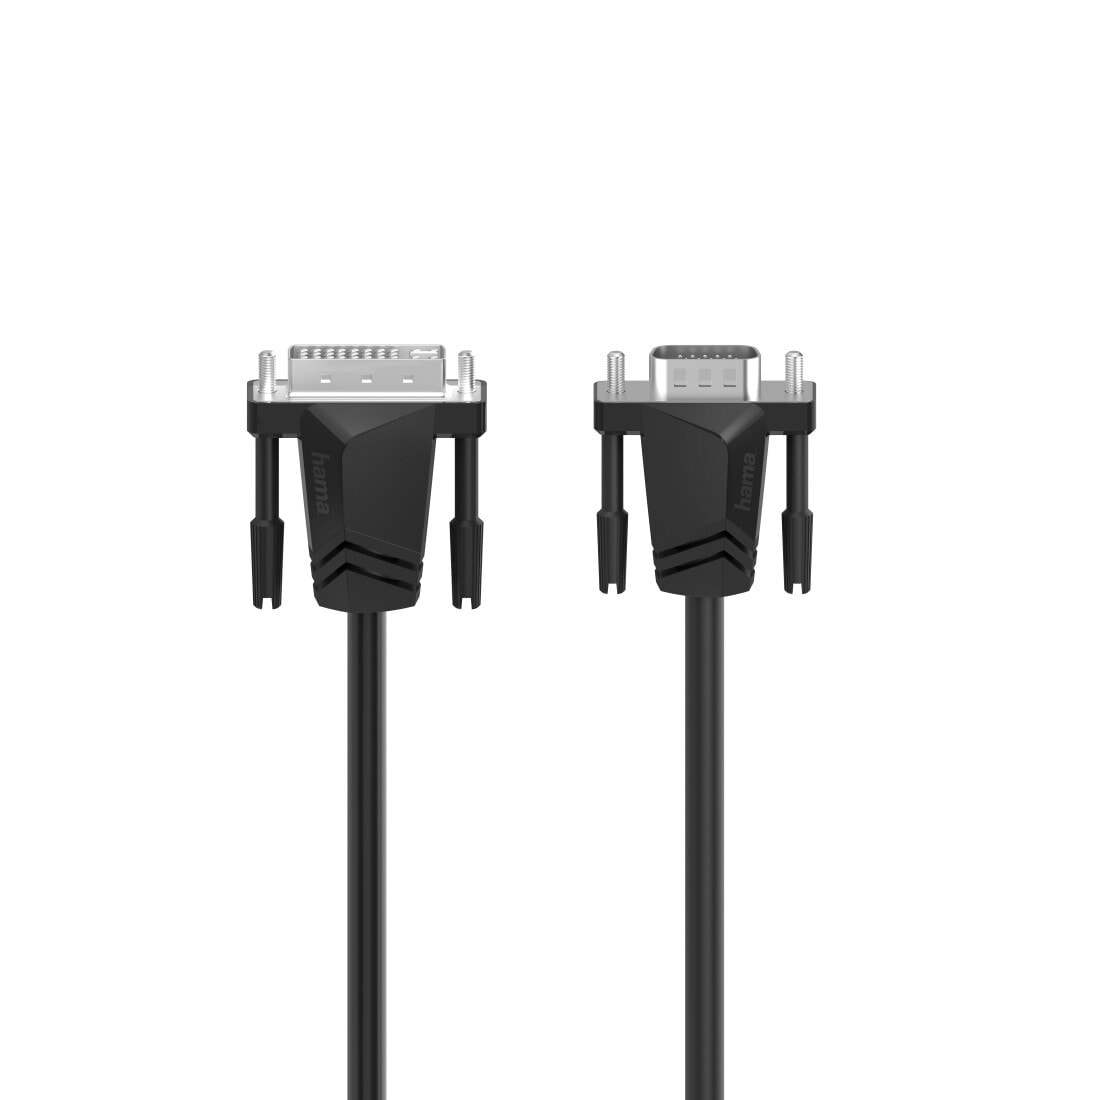 Hama 00200714 видео кабель адаптер 1,5 m DVI-I VGA (D-Sub) Черный